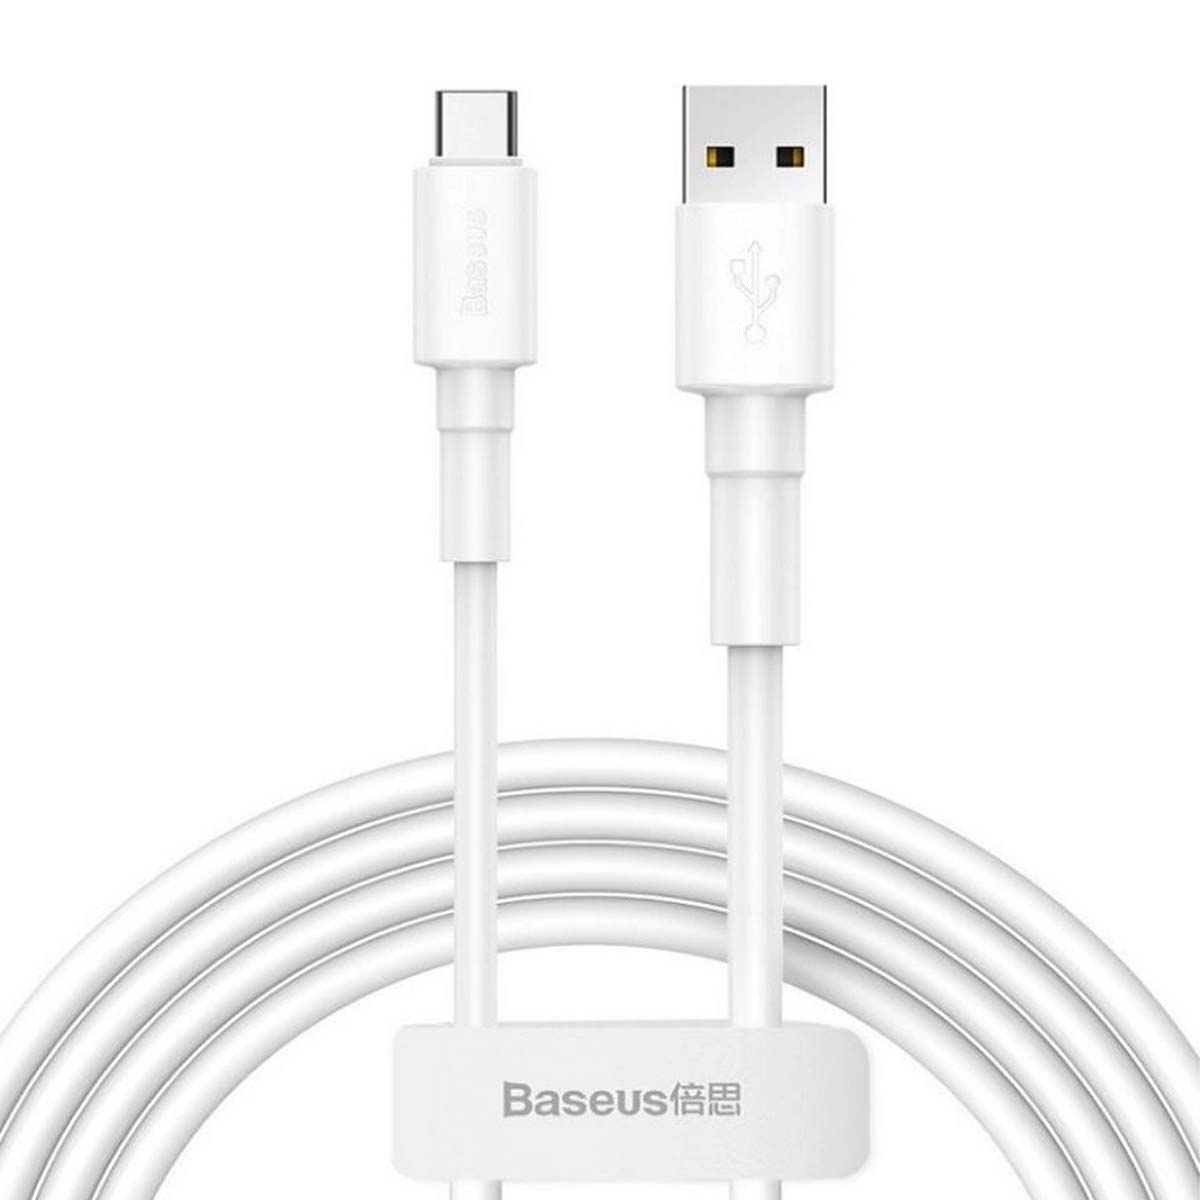 Кабель Baseus Mini White USB Type C, 3A, длина 1 метр, цвет белый